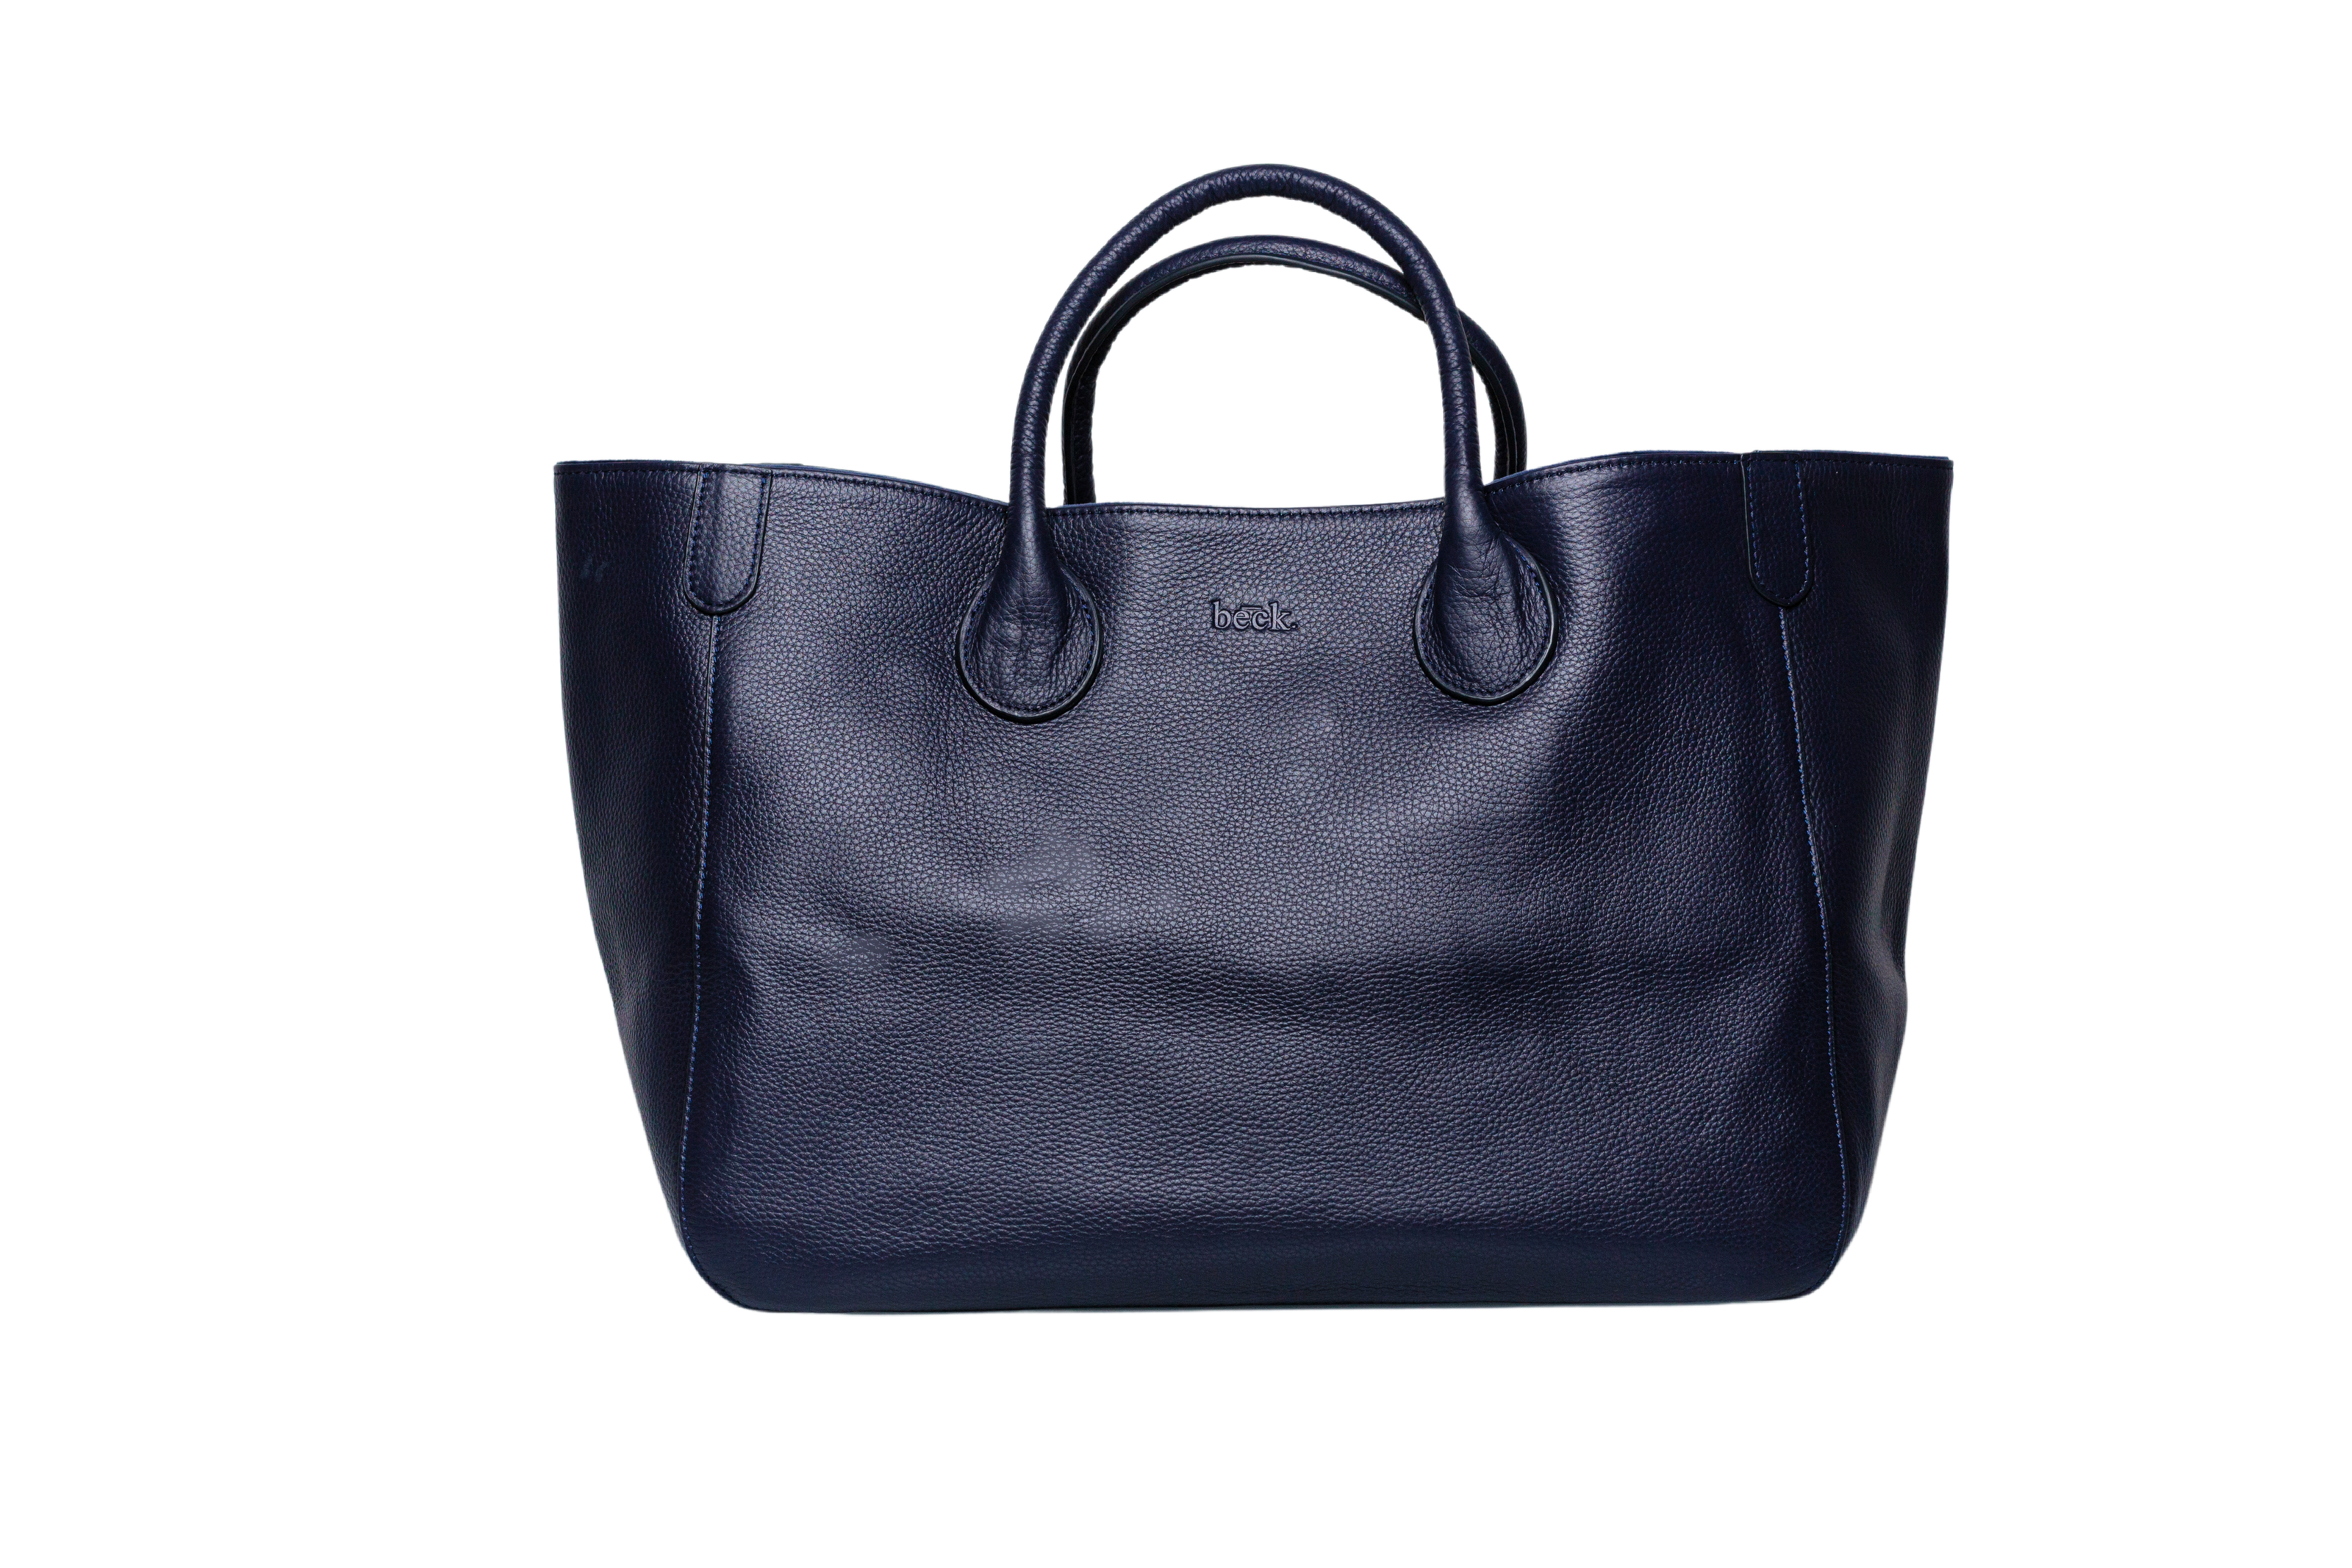 Medium Classic Leather Beck Bag